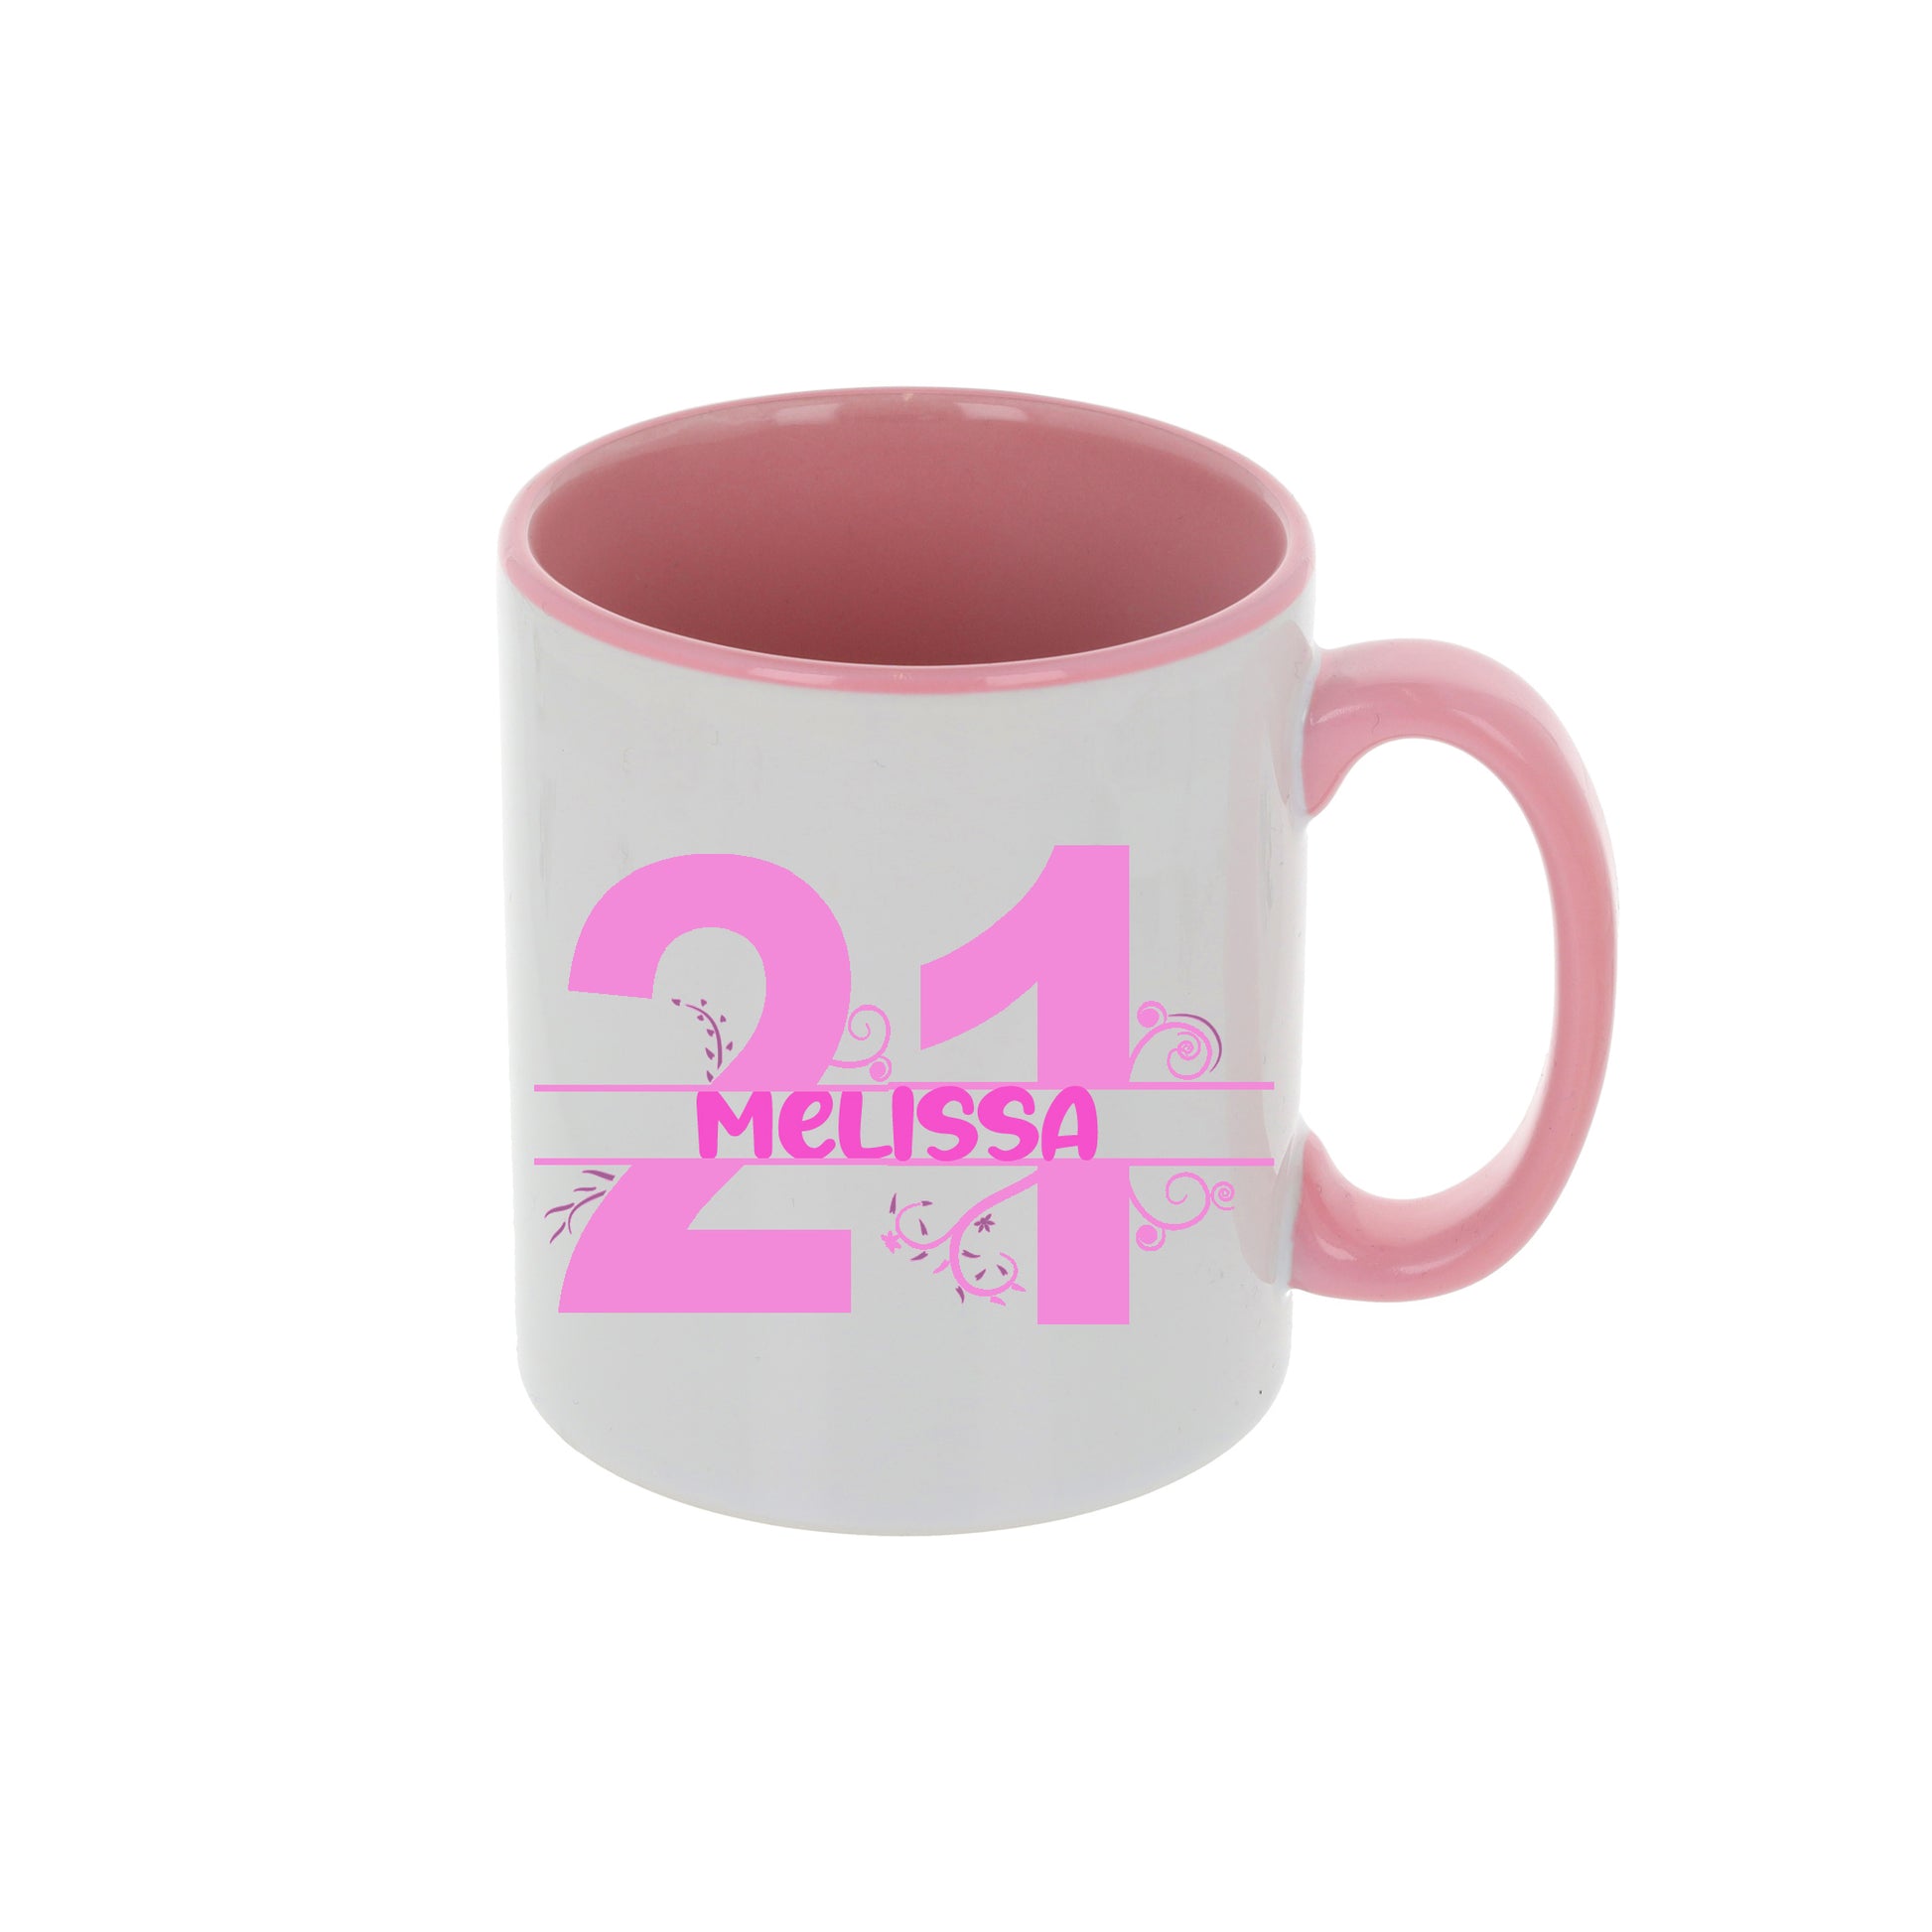 Personalised Filled 21st Birthday Mug  - Always Looking Good - Pink Mug Only  